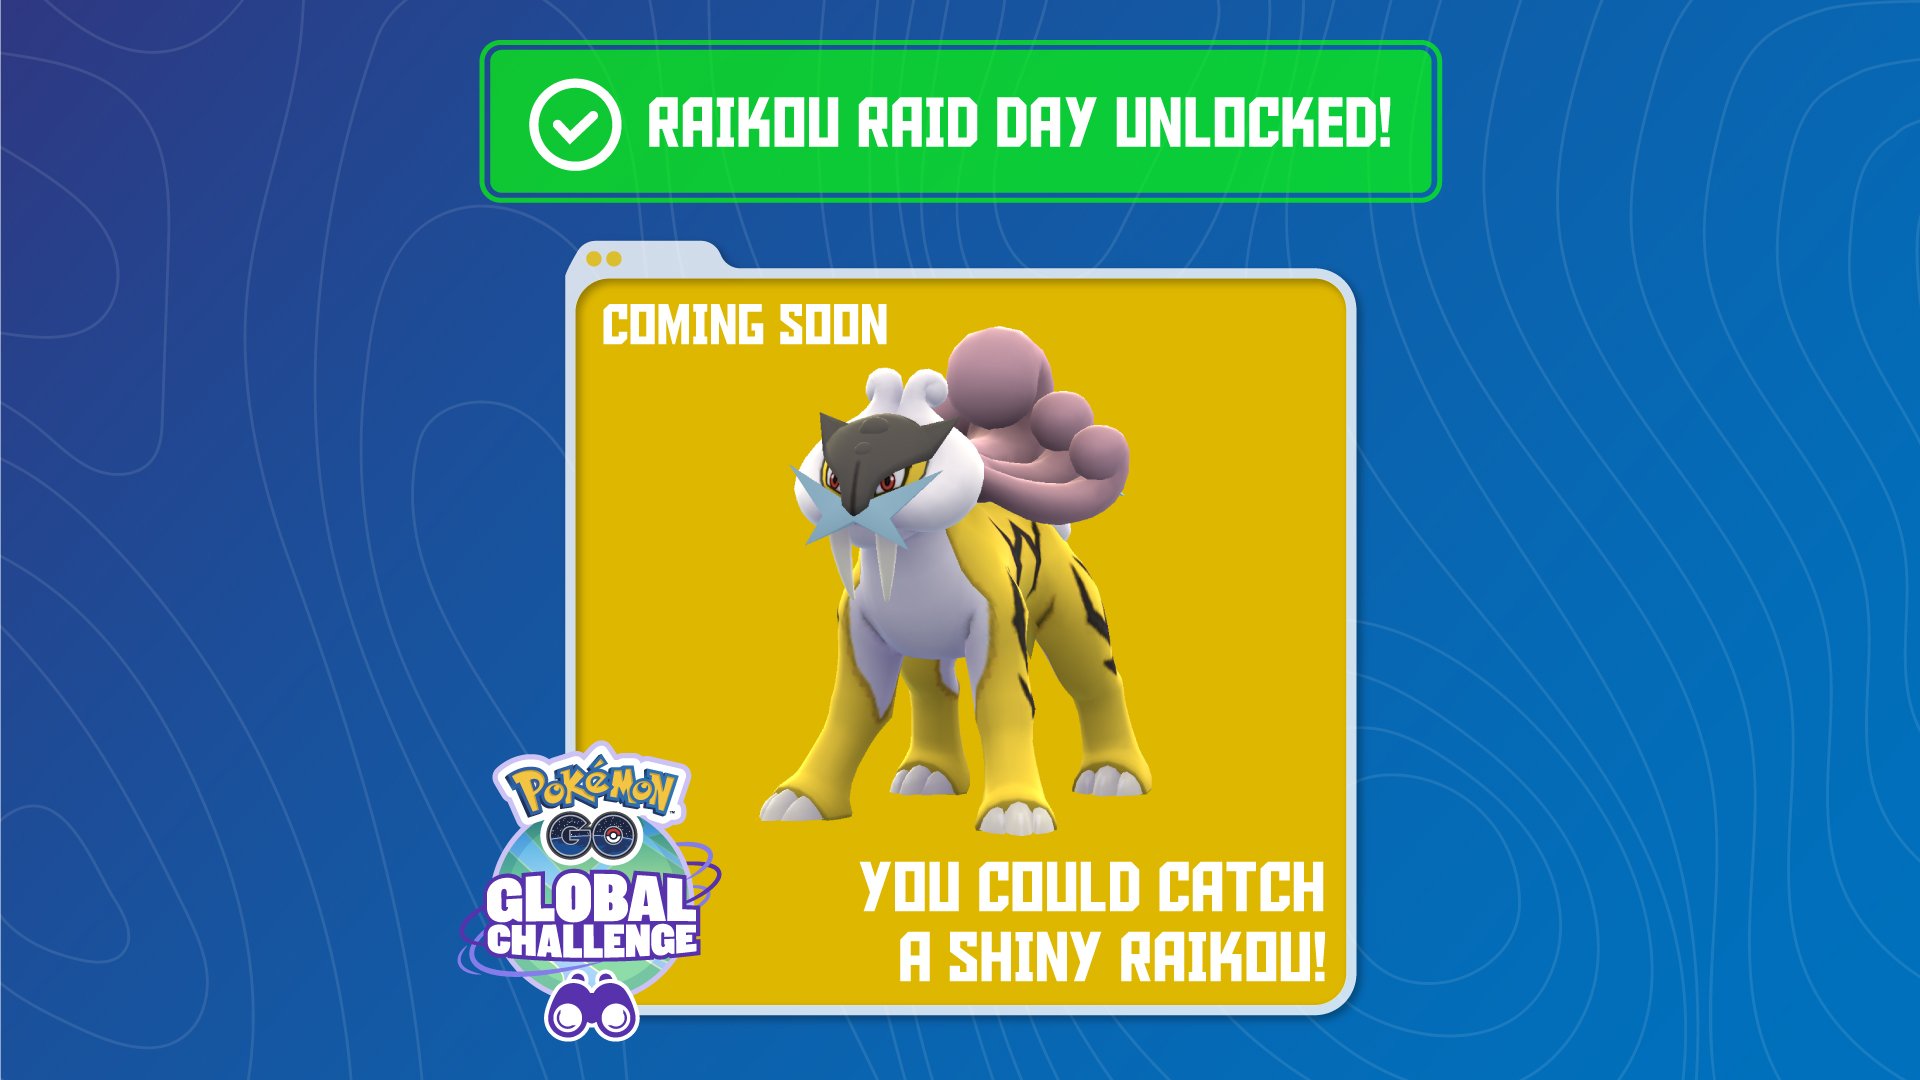 Getting LUCKY with Shiny Raikou! Catching RARE Shiny Raikou in Pokémon